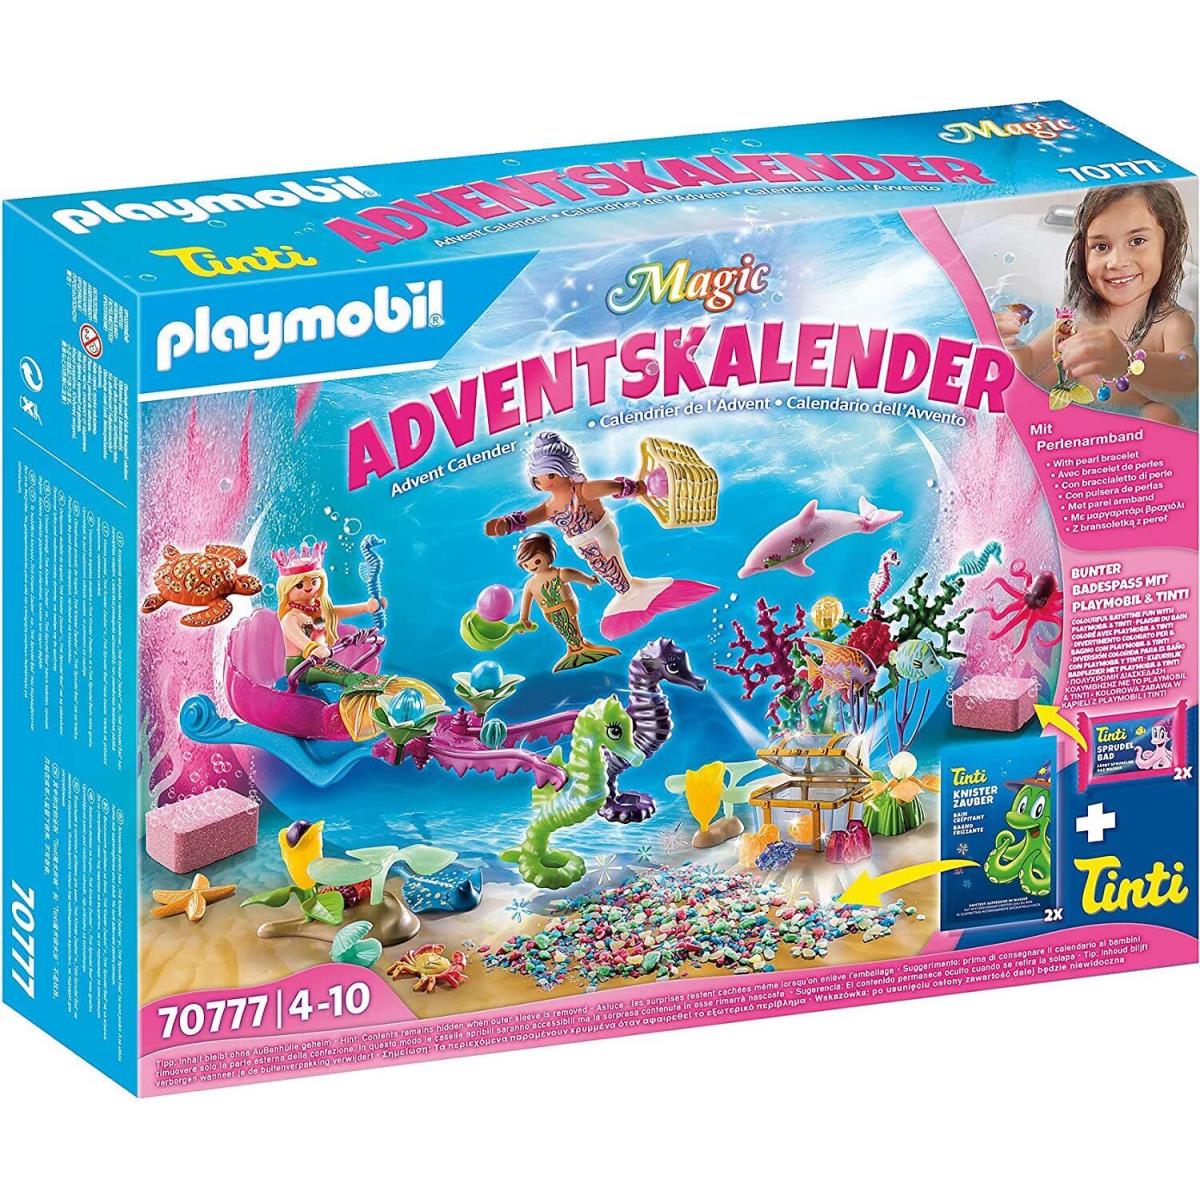 Playmobil 70777 Magical Mermaids Advent Calendar Turtle Dolphin Bath Toy